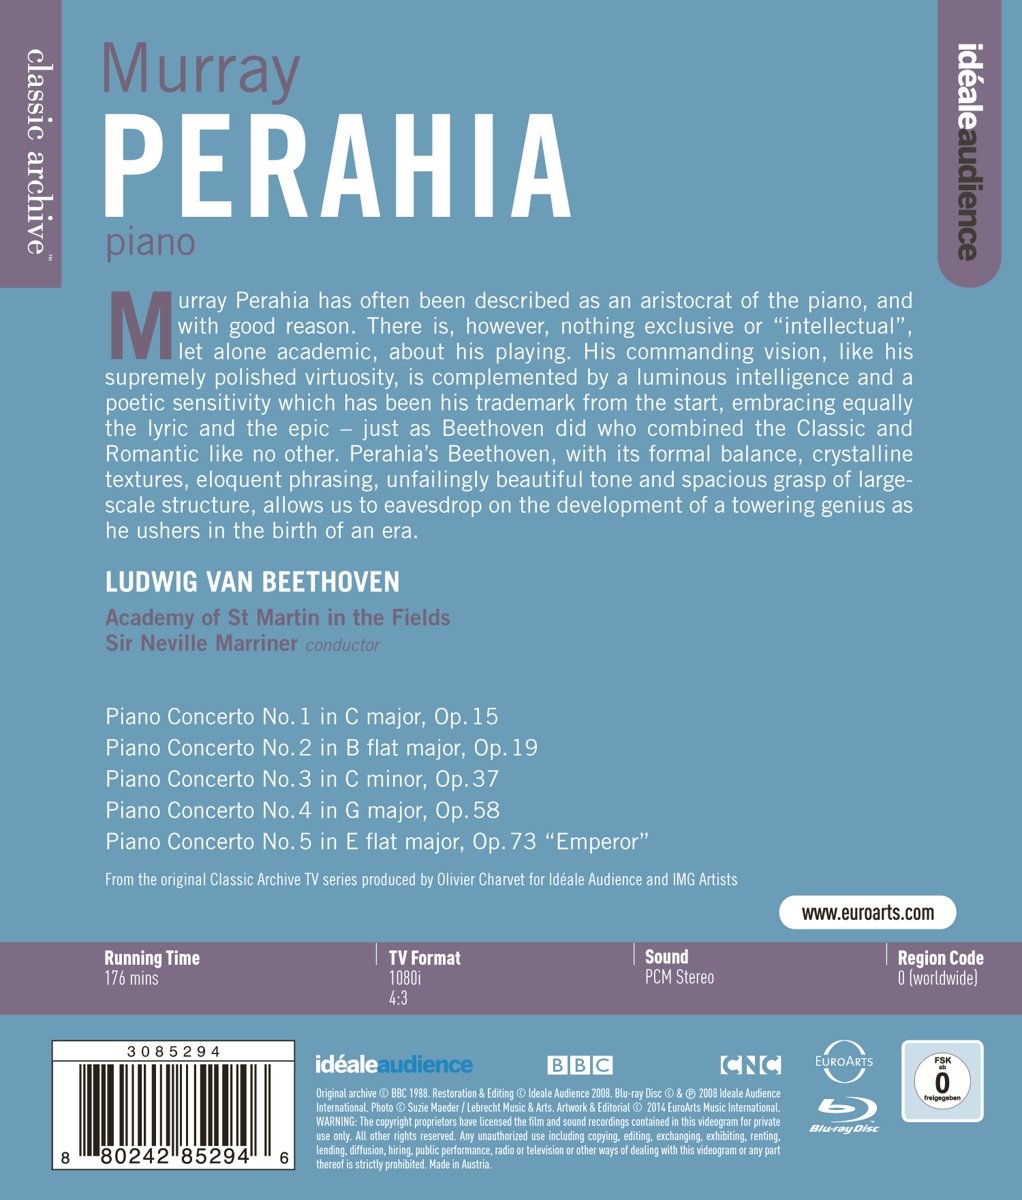 Murray Perahia 베토벤: 피아노 협주곡 전곡 - 머레이 페라이어 (Beethoven: The Complete Piano Concertos) 